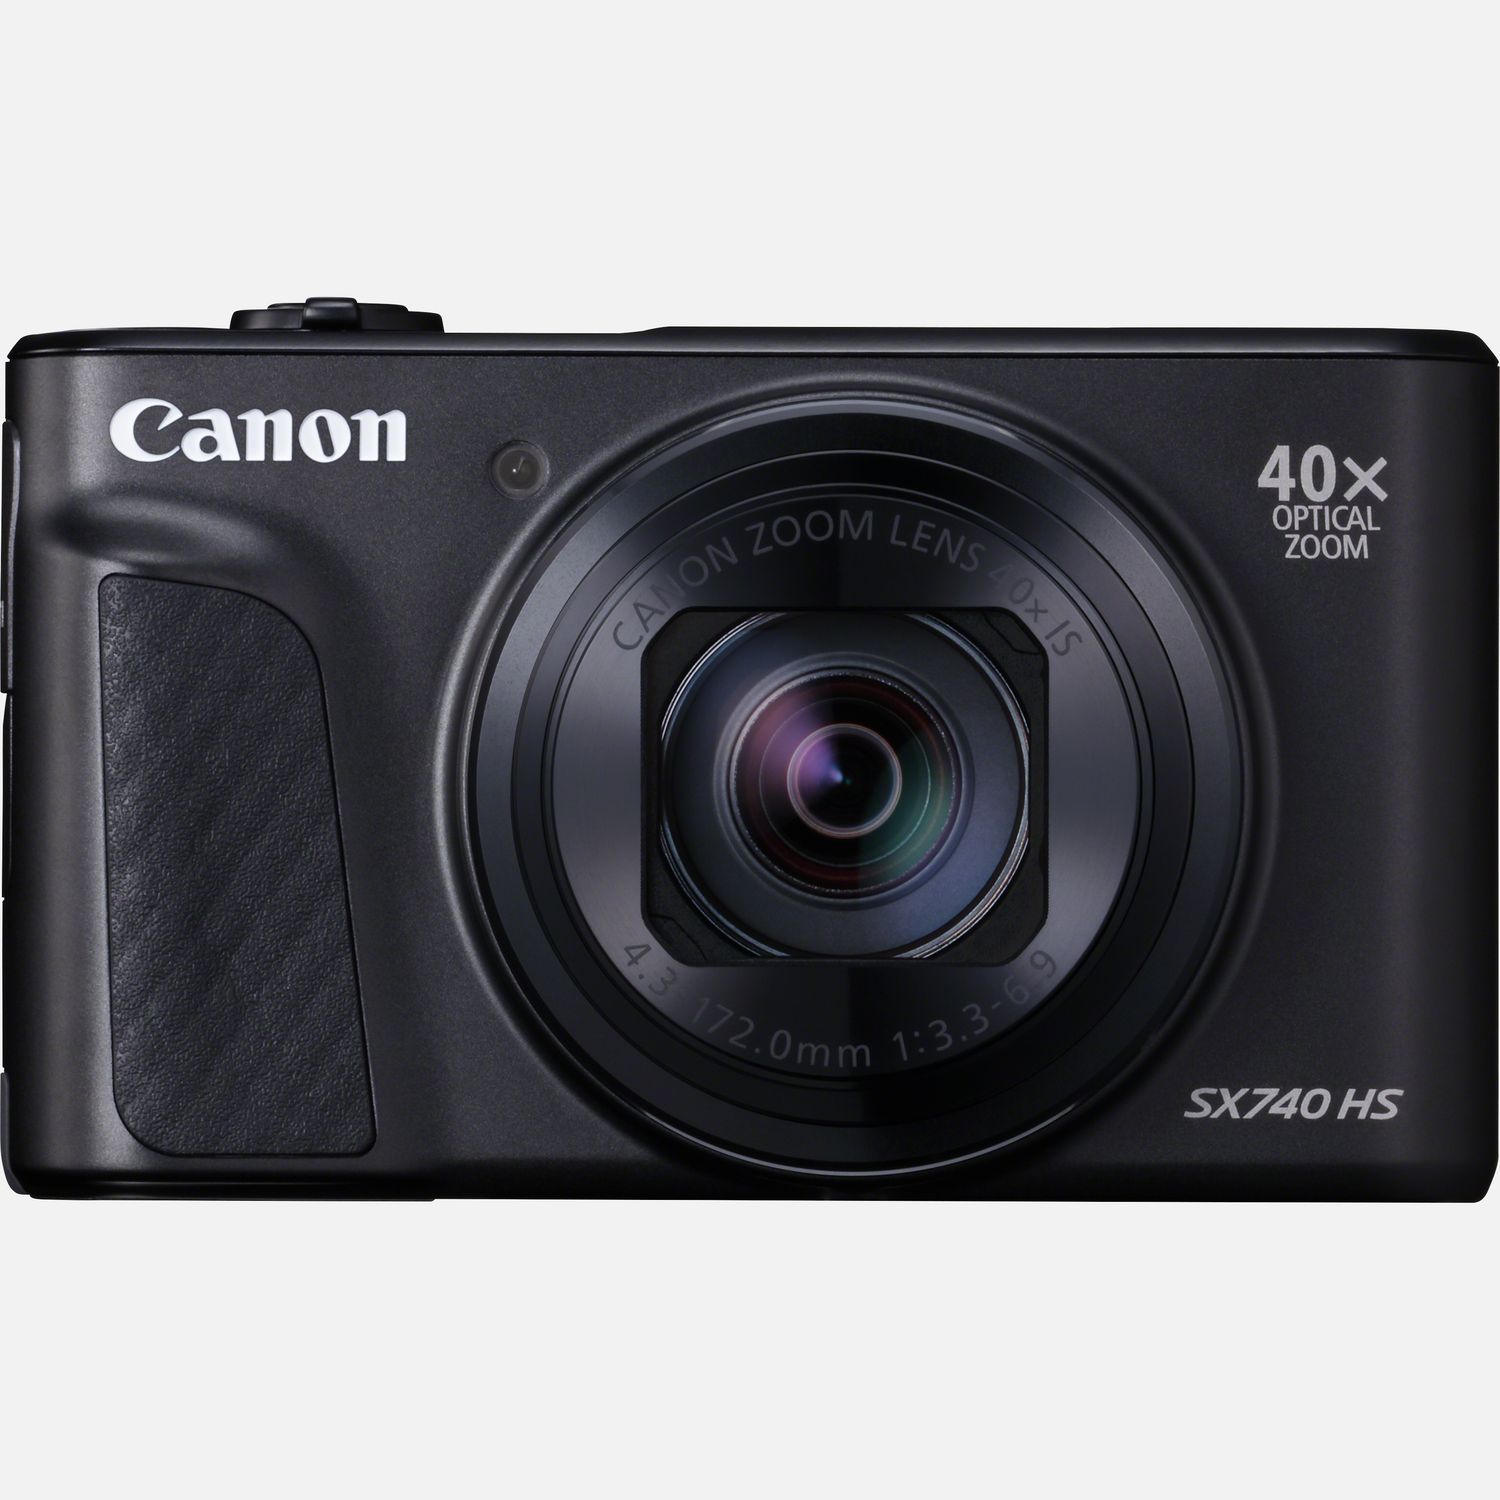 Image of Fotocamera Canon PowerShot SX740 HS, Nero